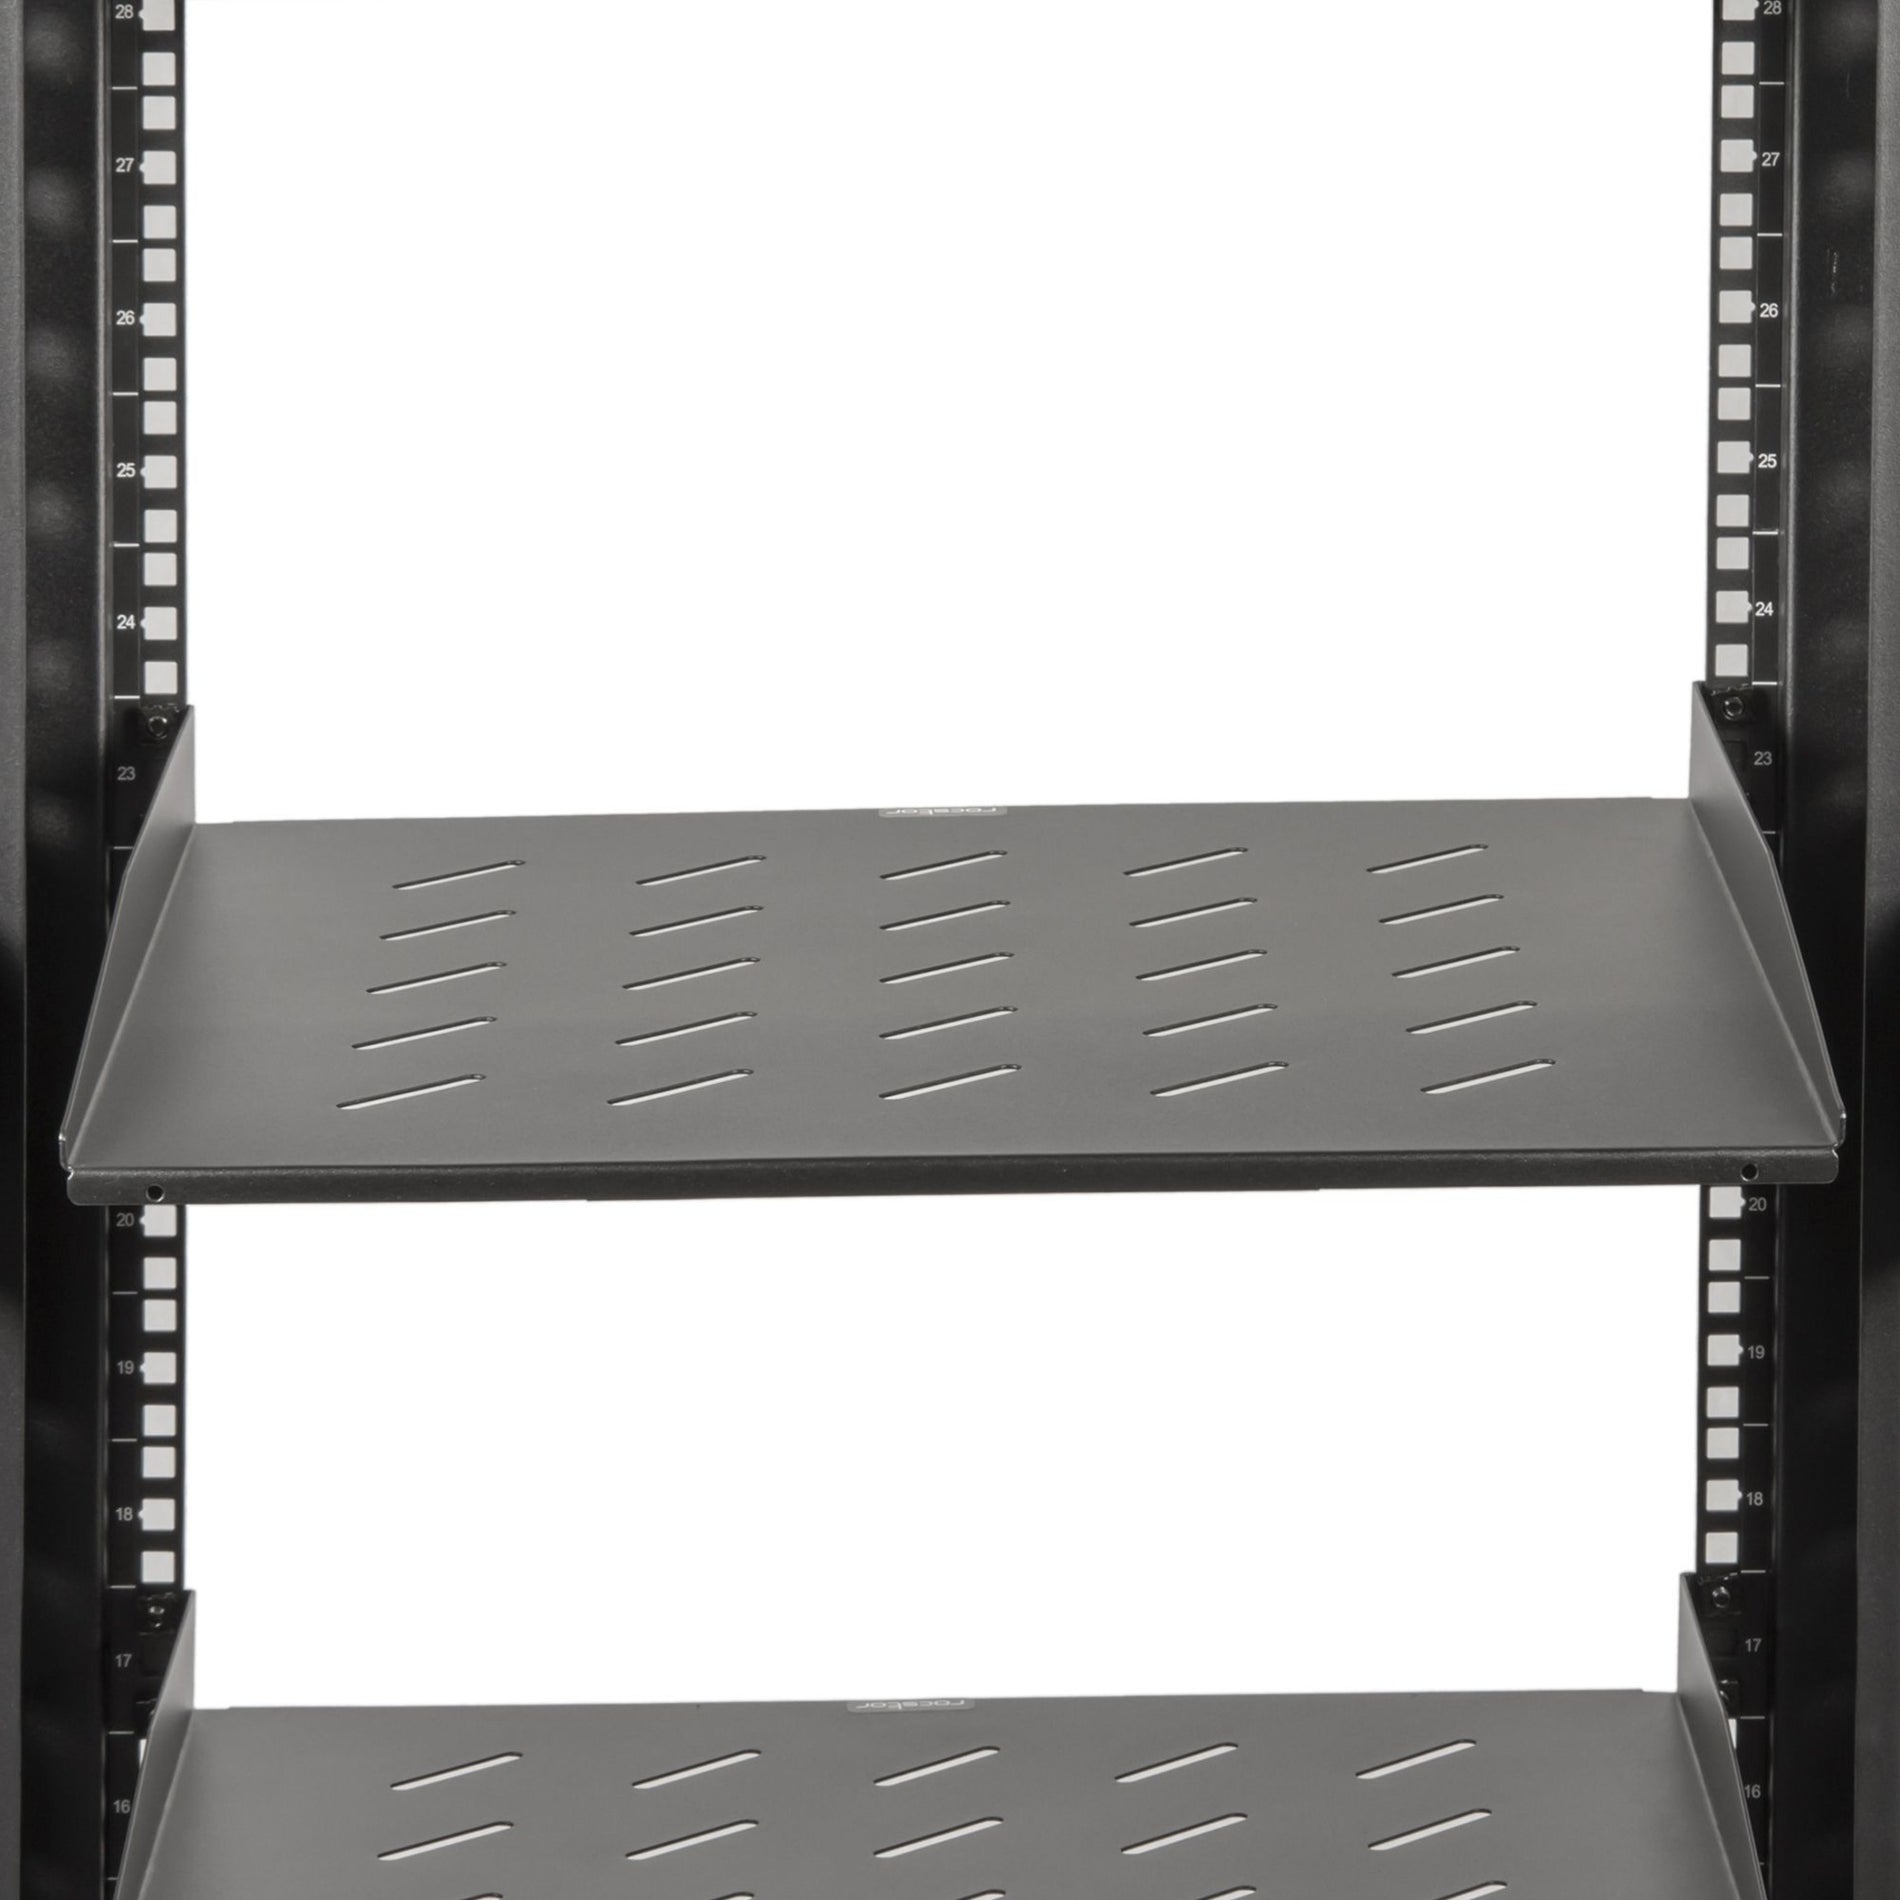 Rocstor Y10E017-B1 Rack Shelf, 1U Universal Vented, 19" Rack Width, 13.8" Depth, 44.09 lb Maximum Weight Capacity